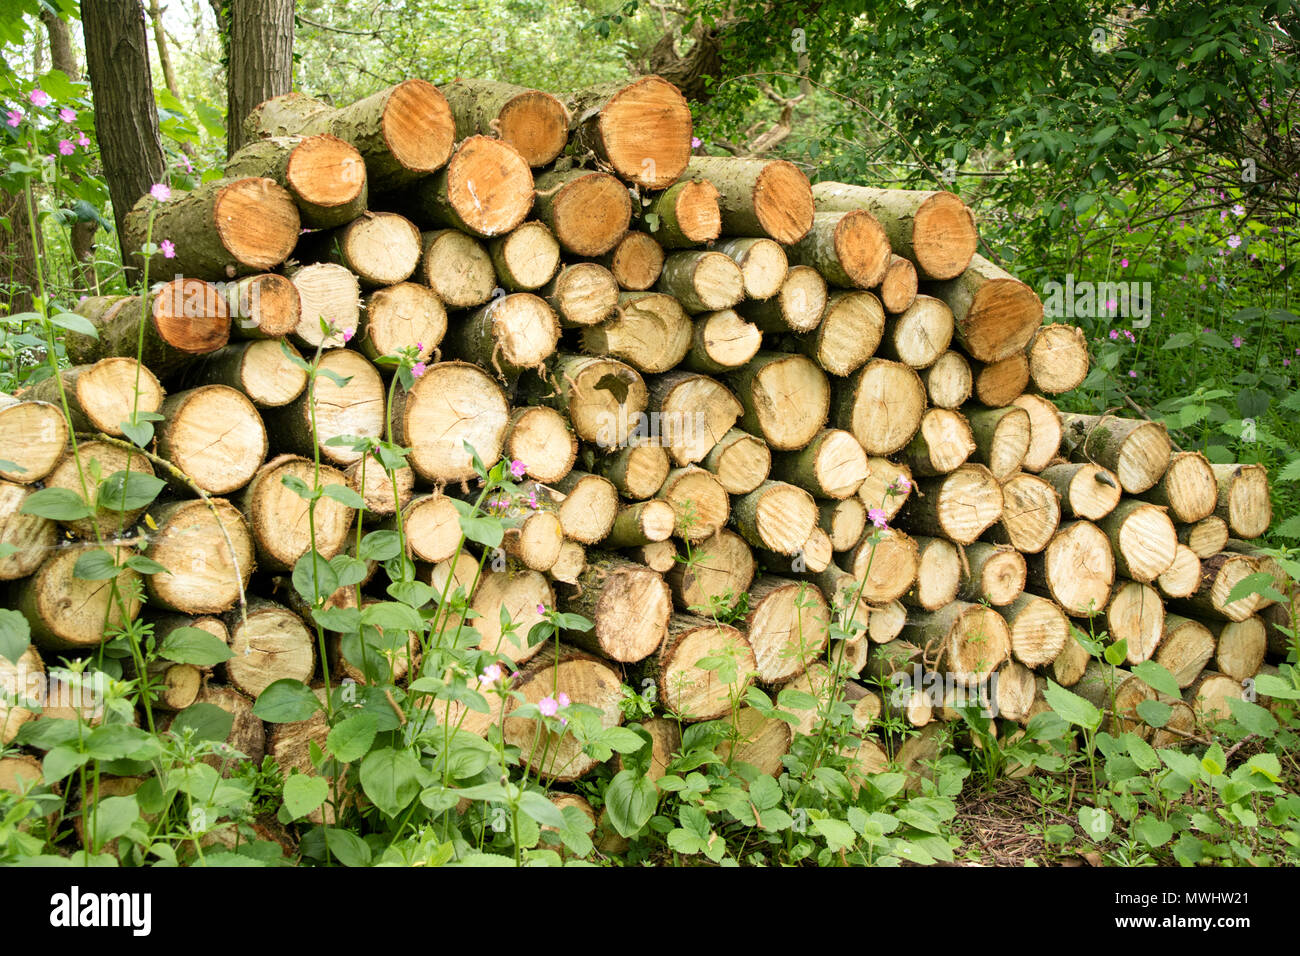 Logs stacked as a wildlife habitat, England, UK Stock Photo